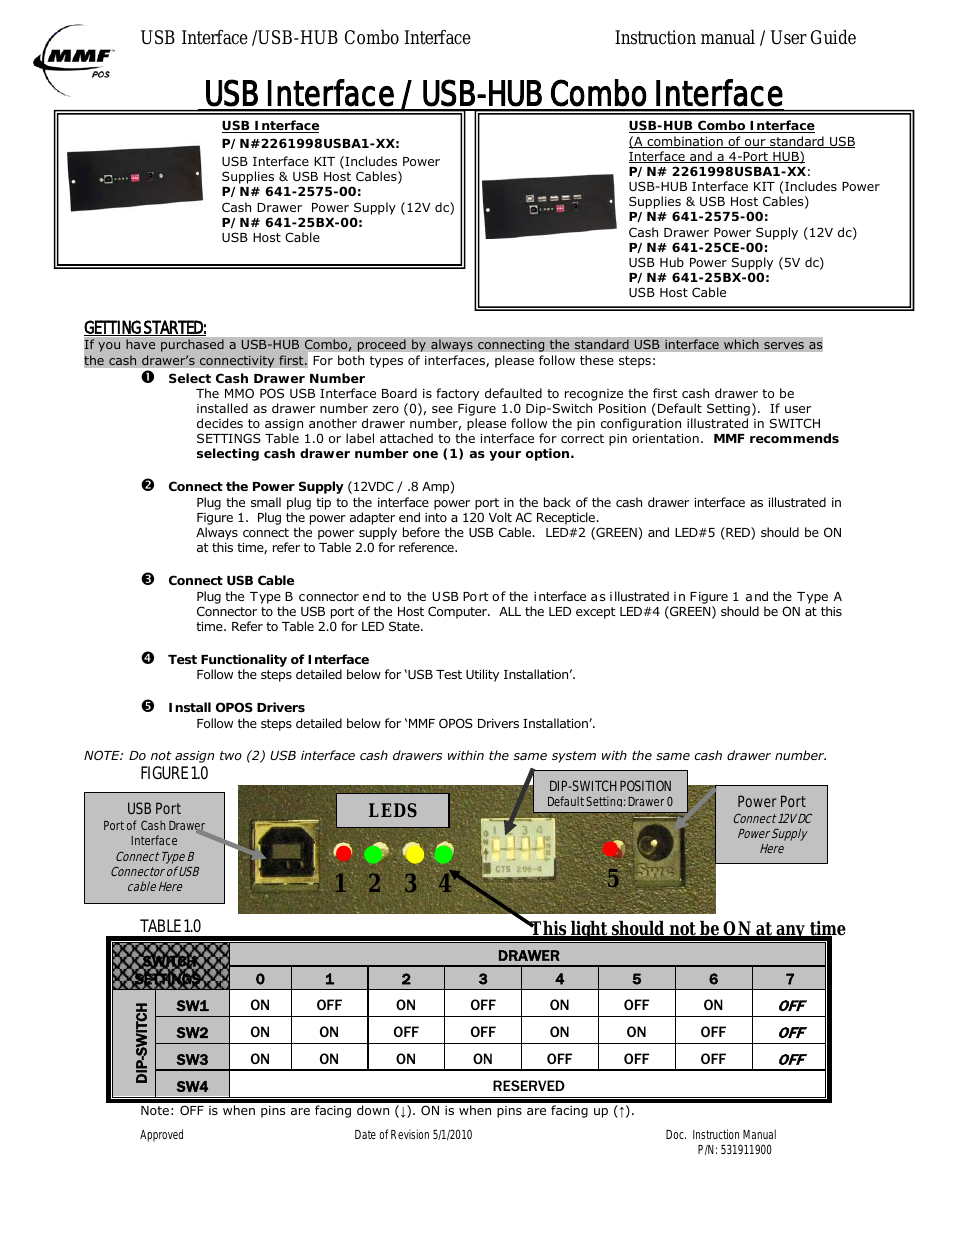 USB with Statistics and 4 Port Hub Combo Interface Kit